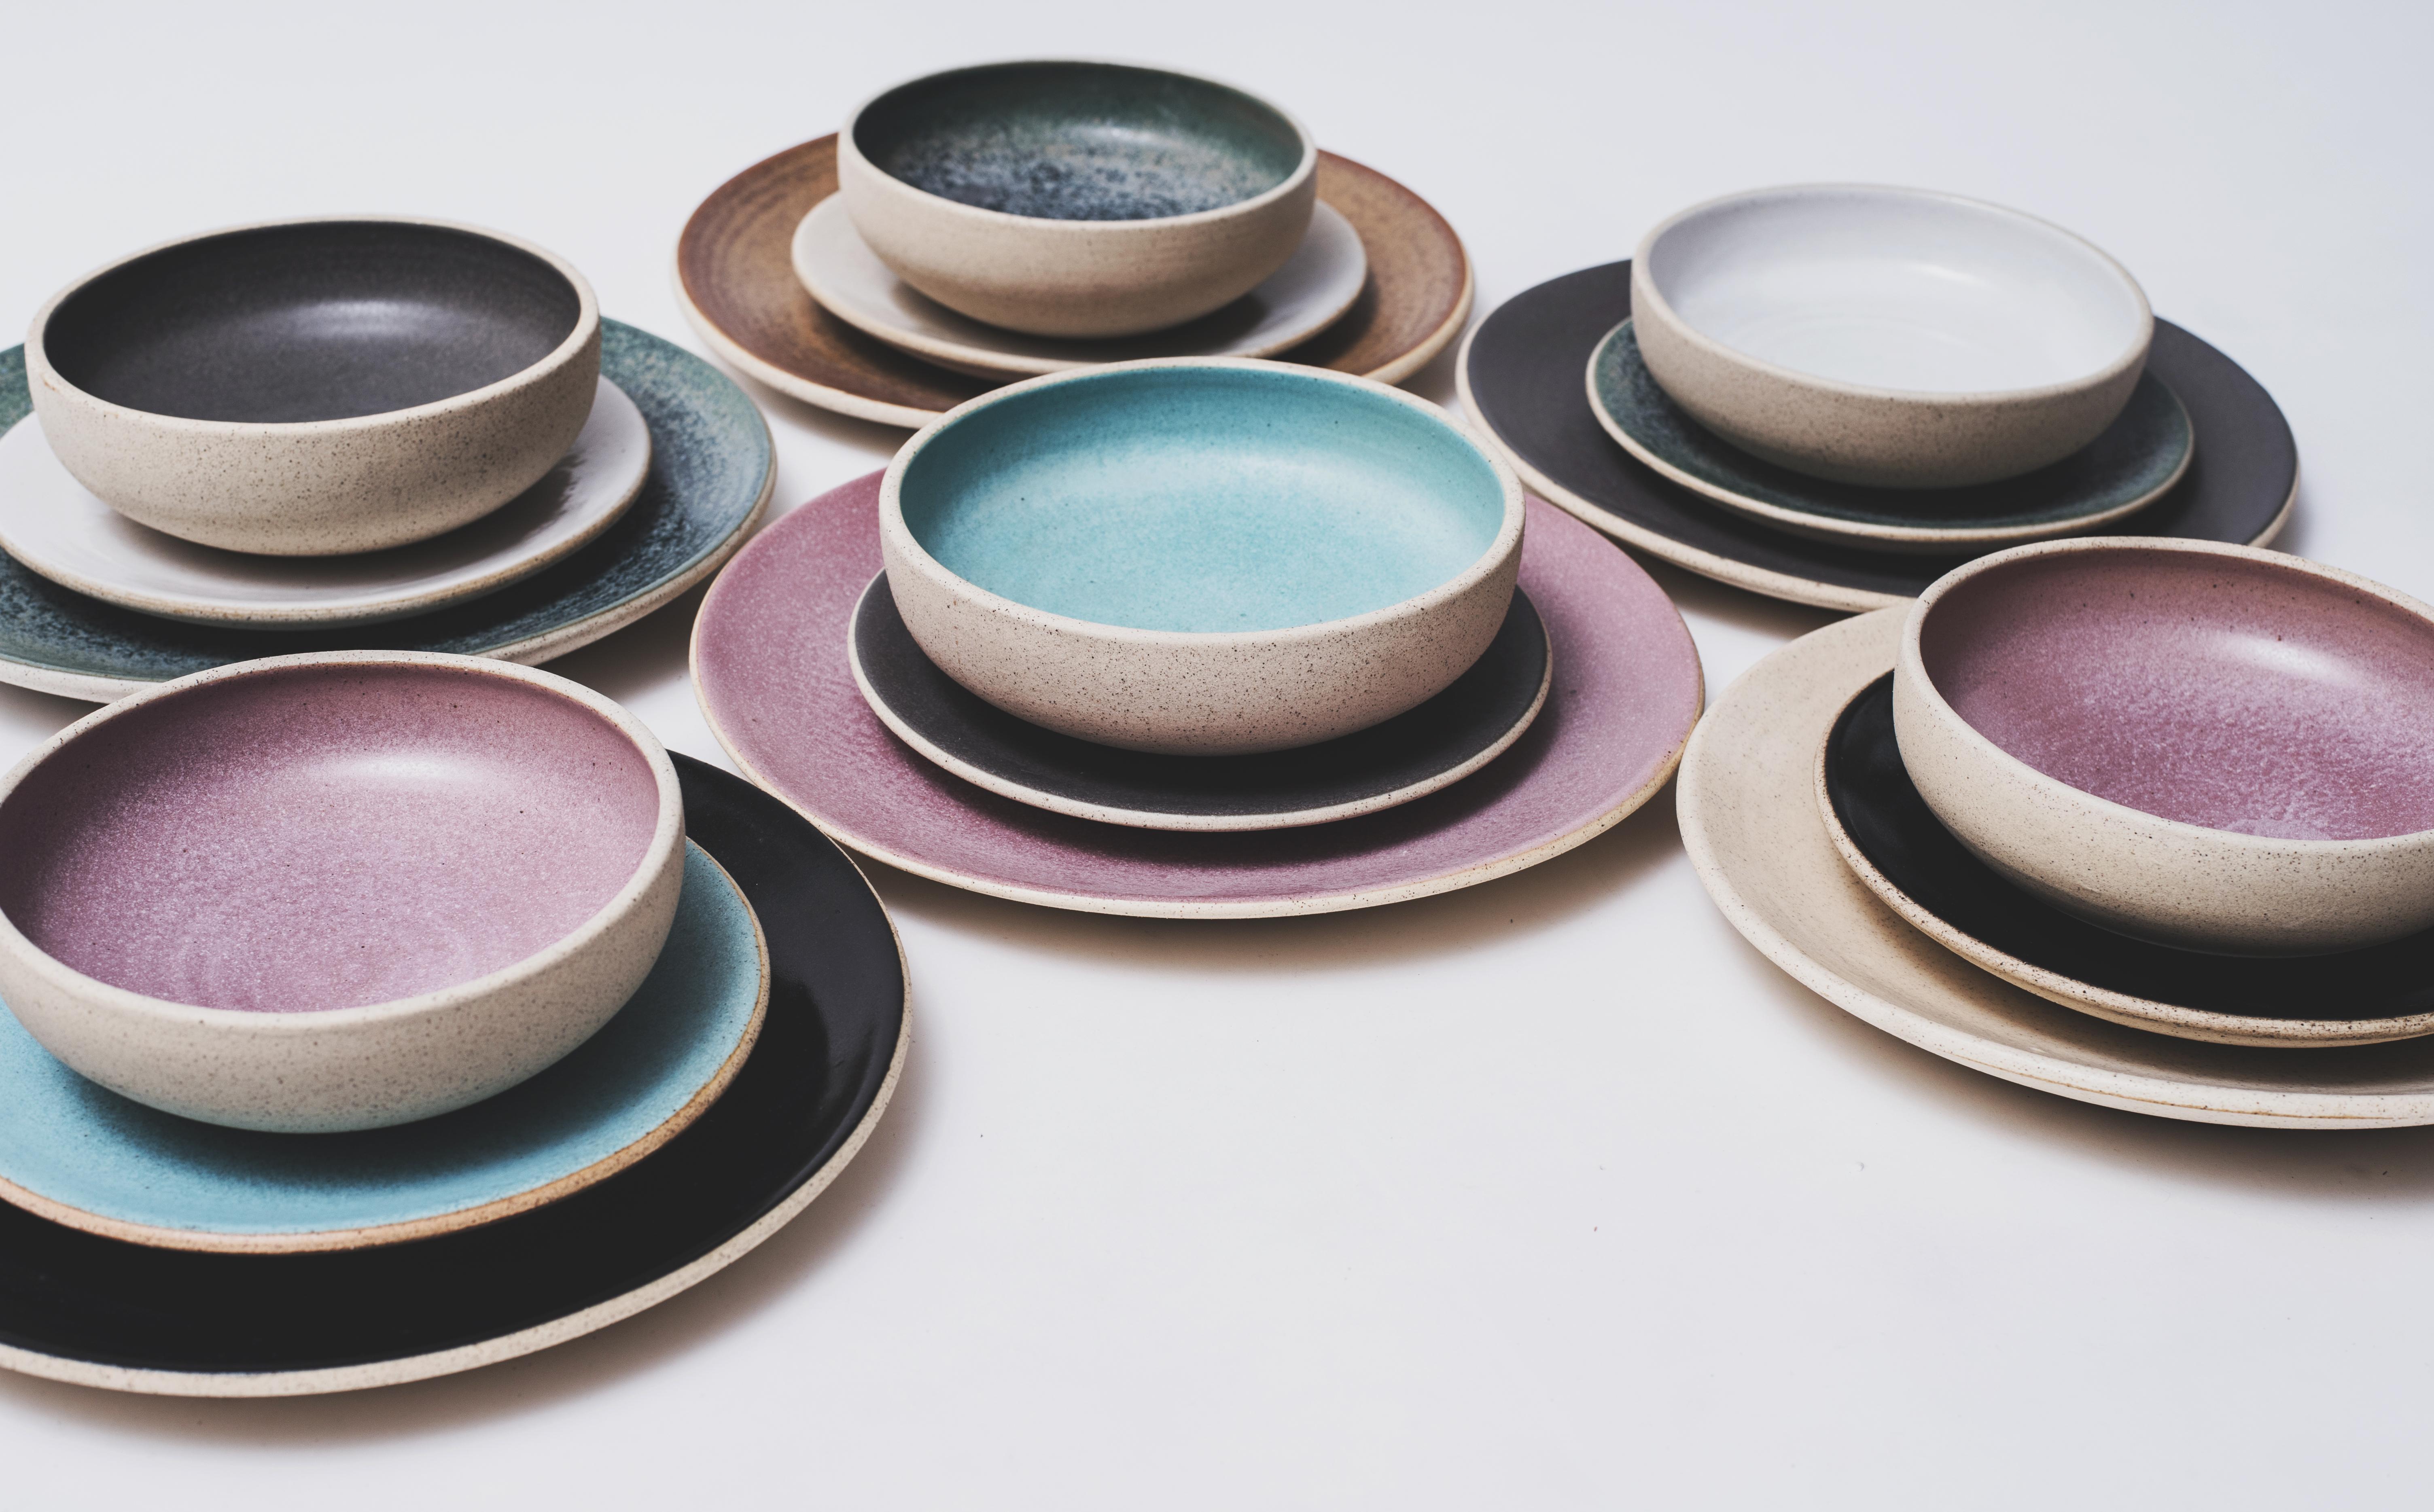 Organic Modern Handmade Ceramic Stoneware Dinner Plate in Turquoise, in Stock